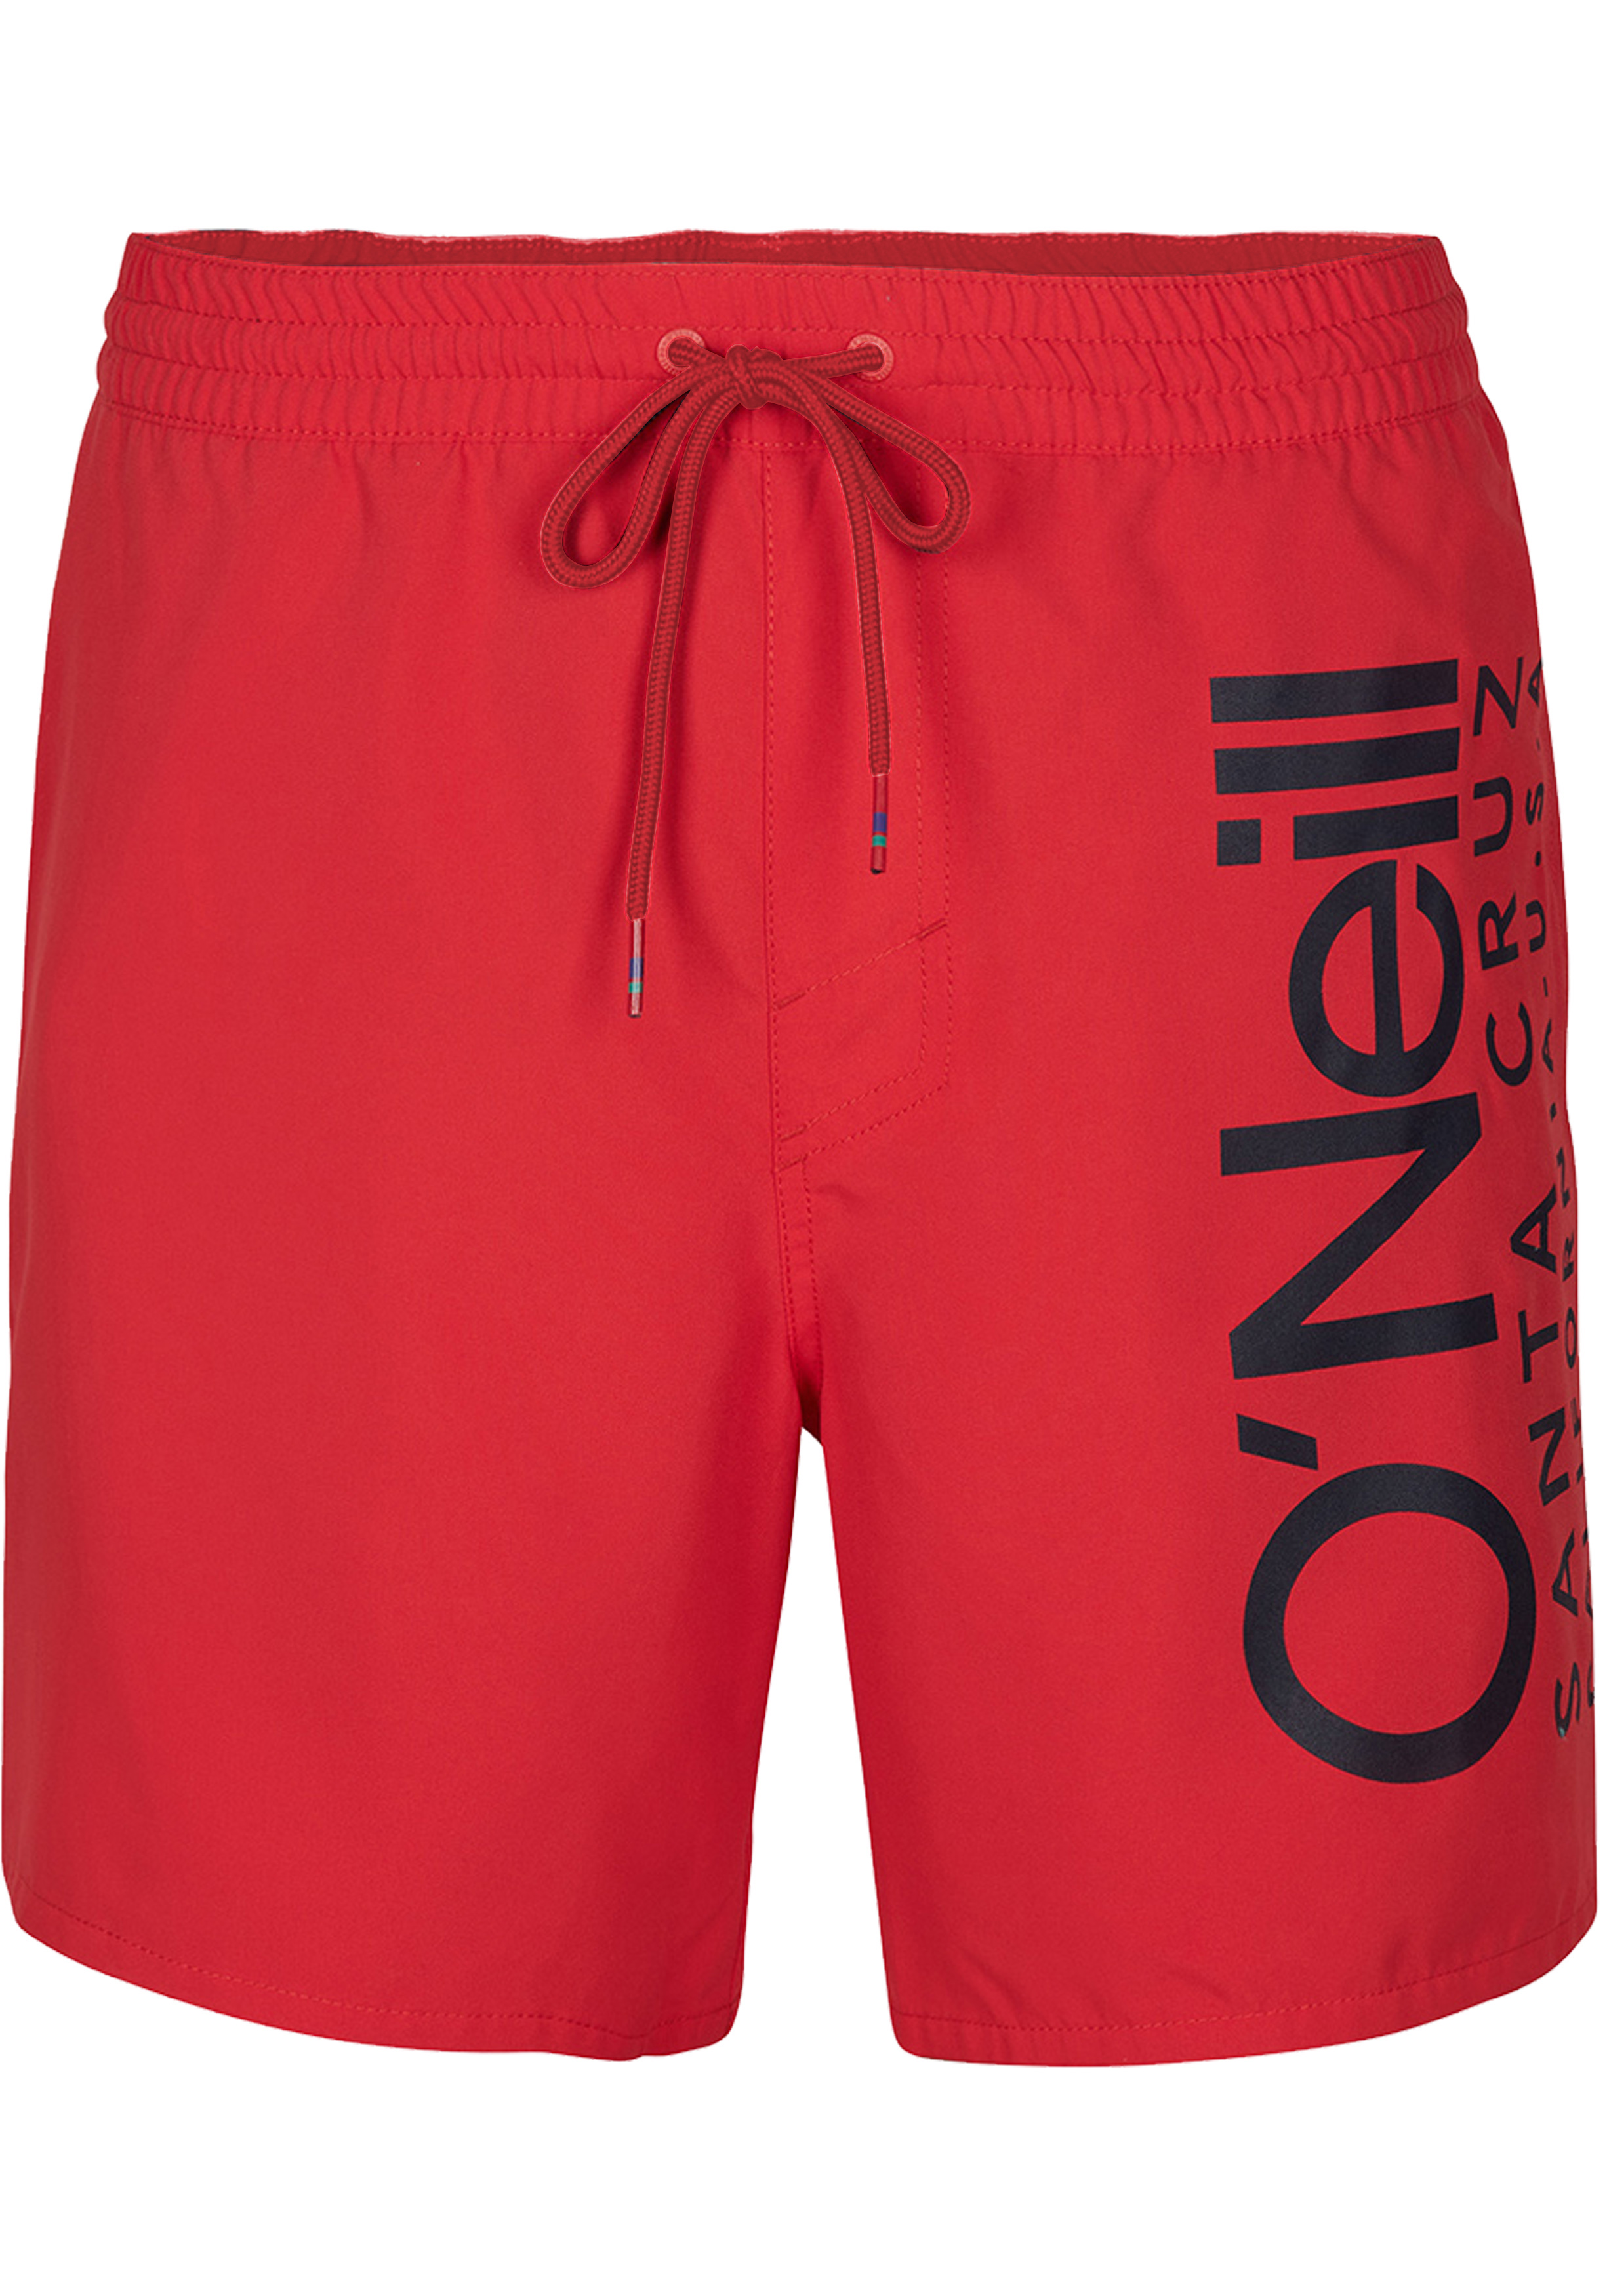 O'Neill heren zwembroek, Original Cali Shorts, rood, Plaid